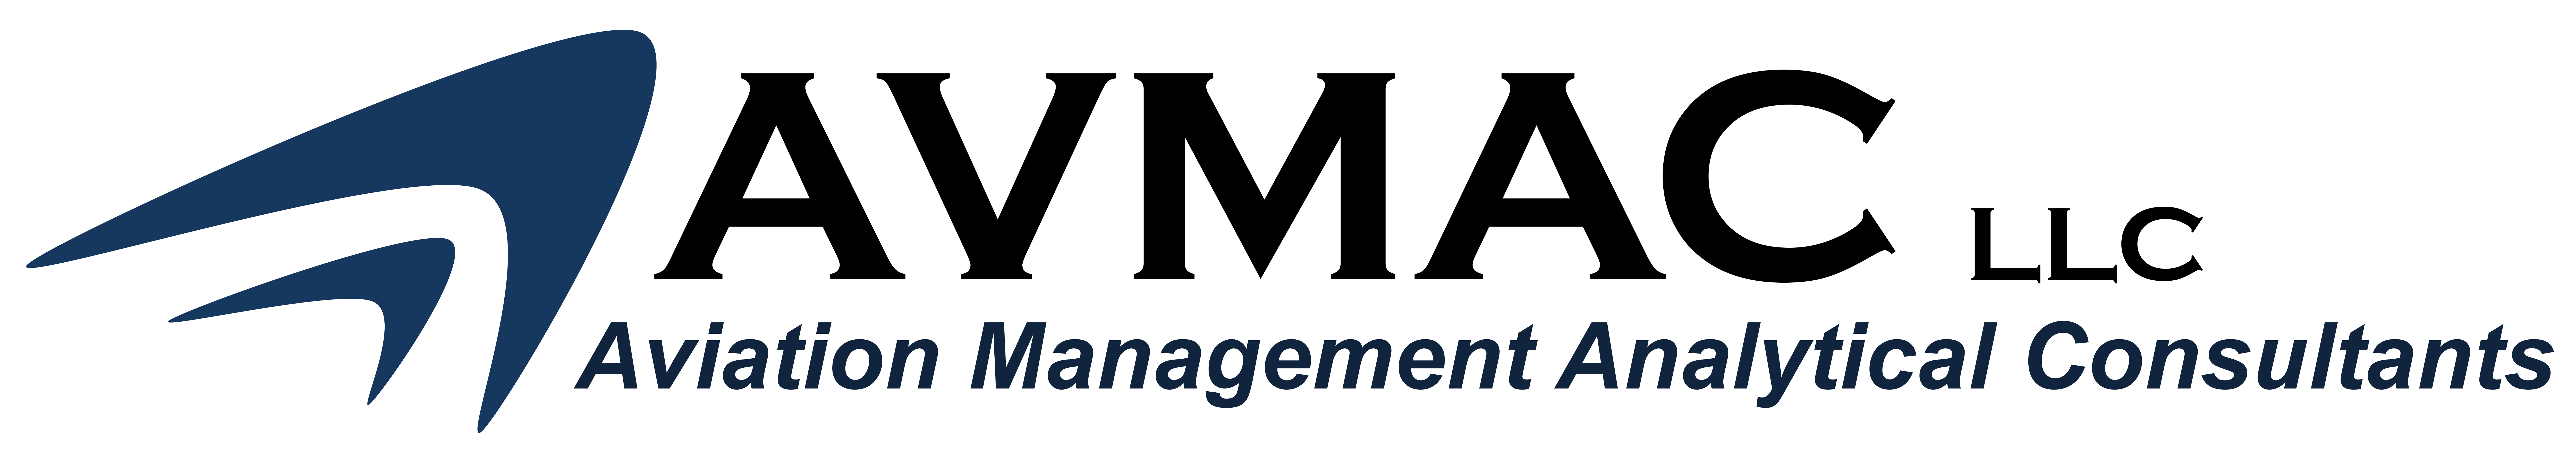 AVMAC LLC logo